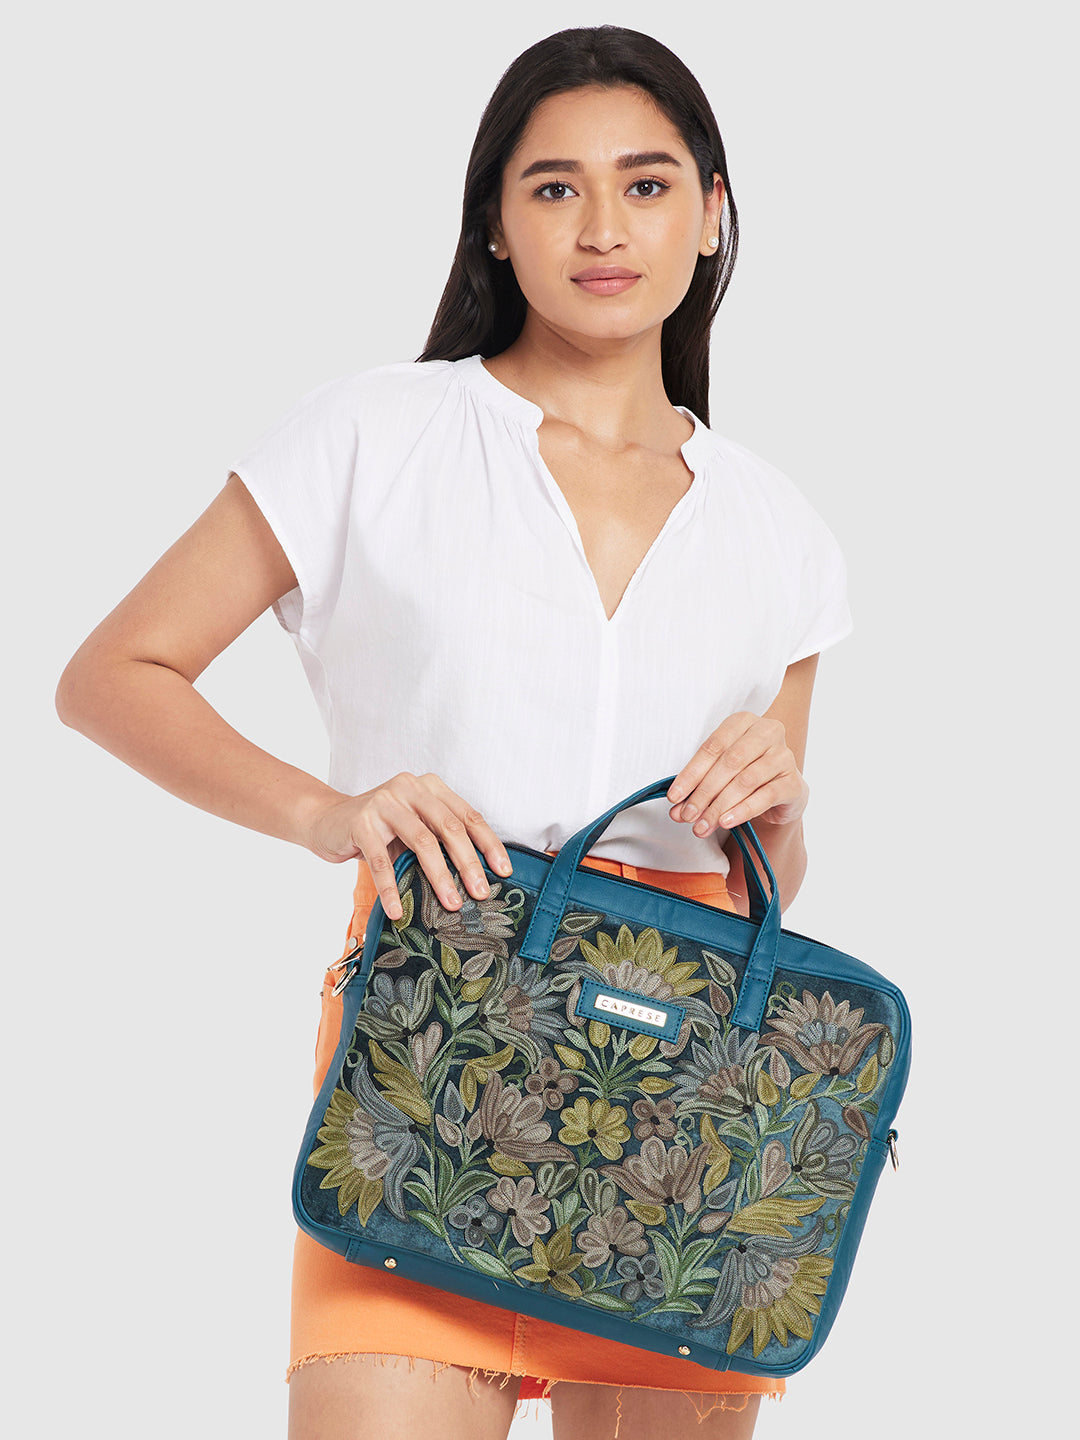 Caprese Tresna Embroidery Laptop Tote Handbag